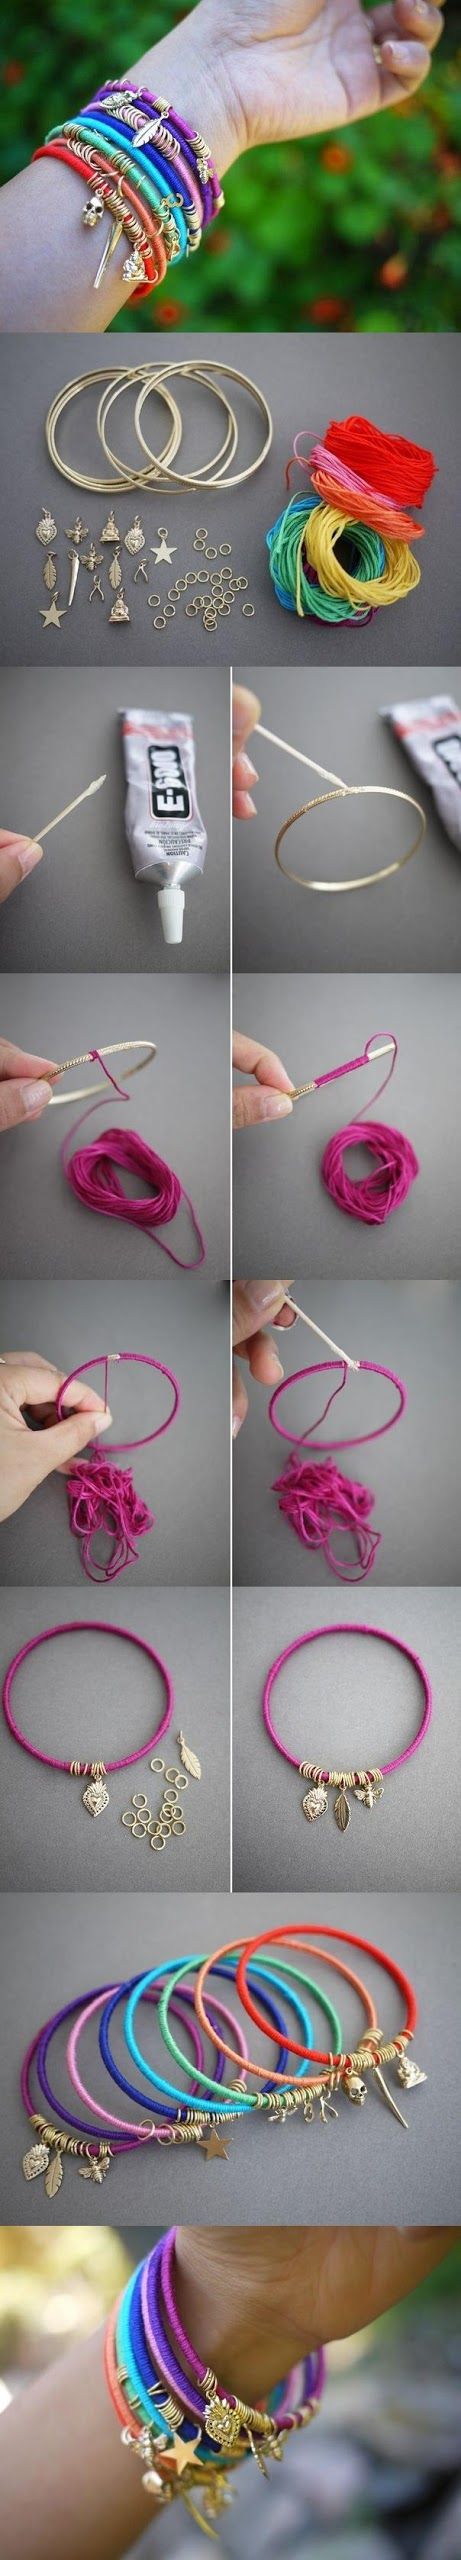 How To Make Summer Bracelet